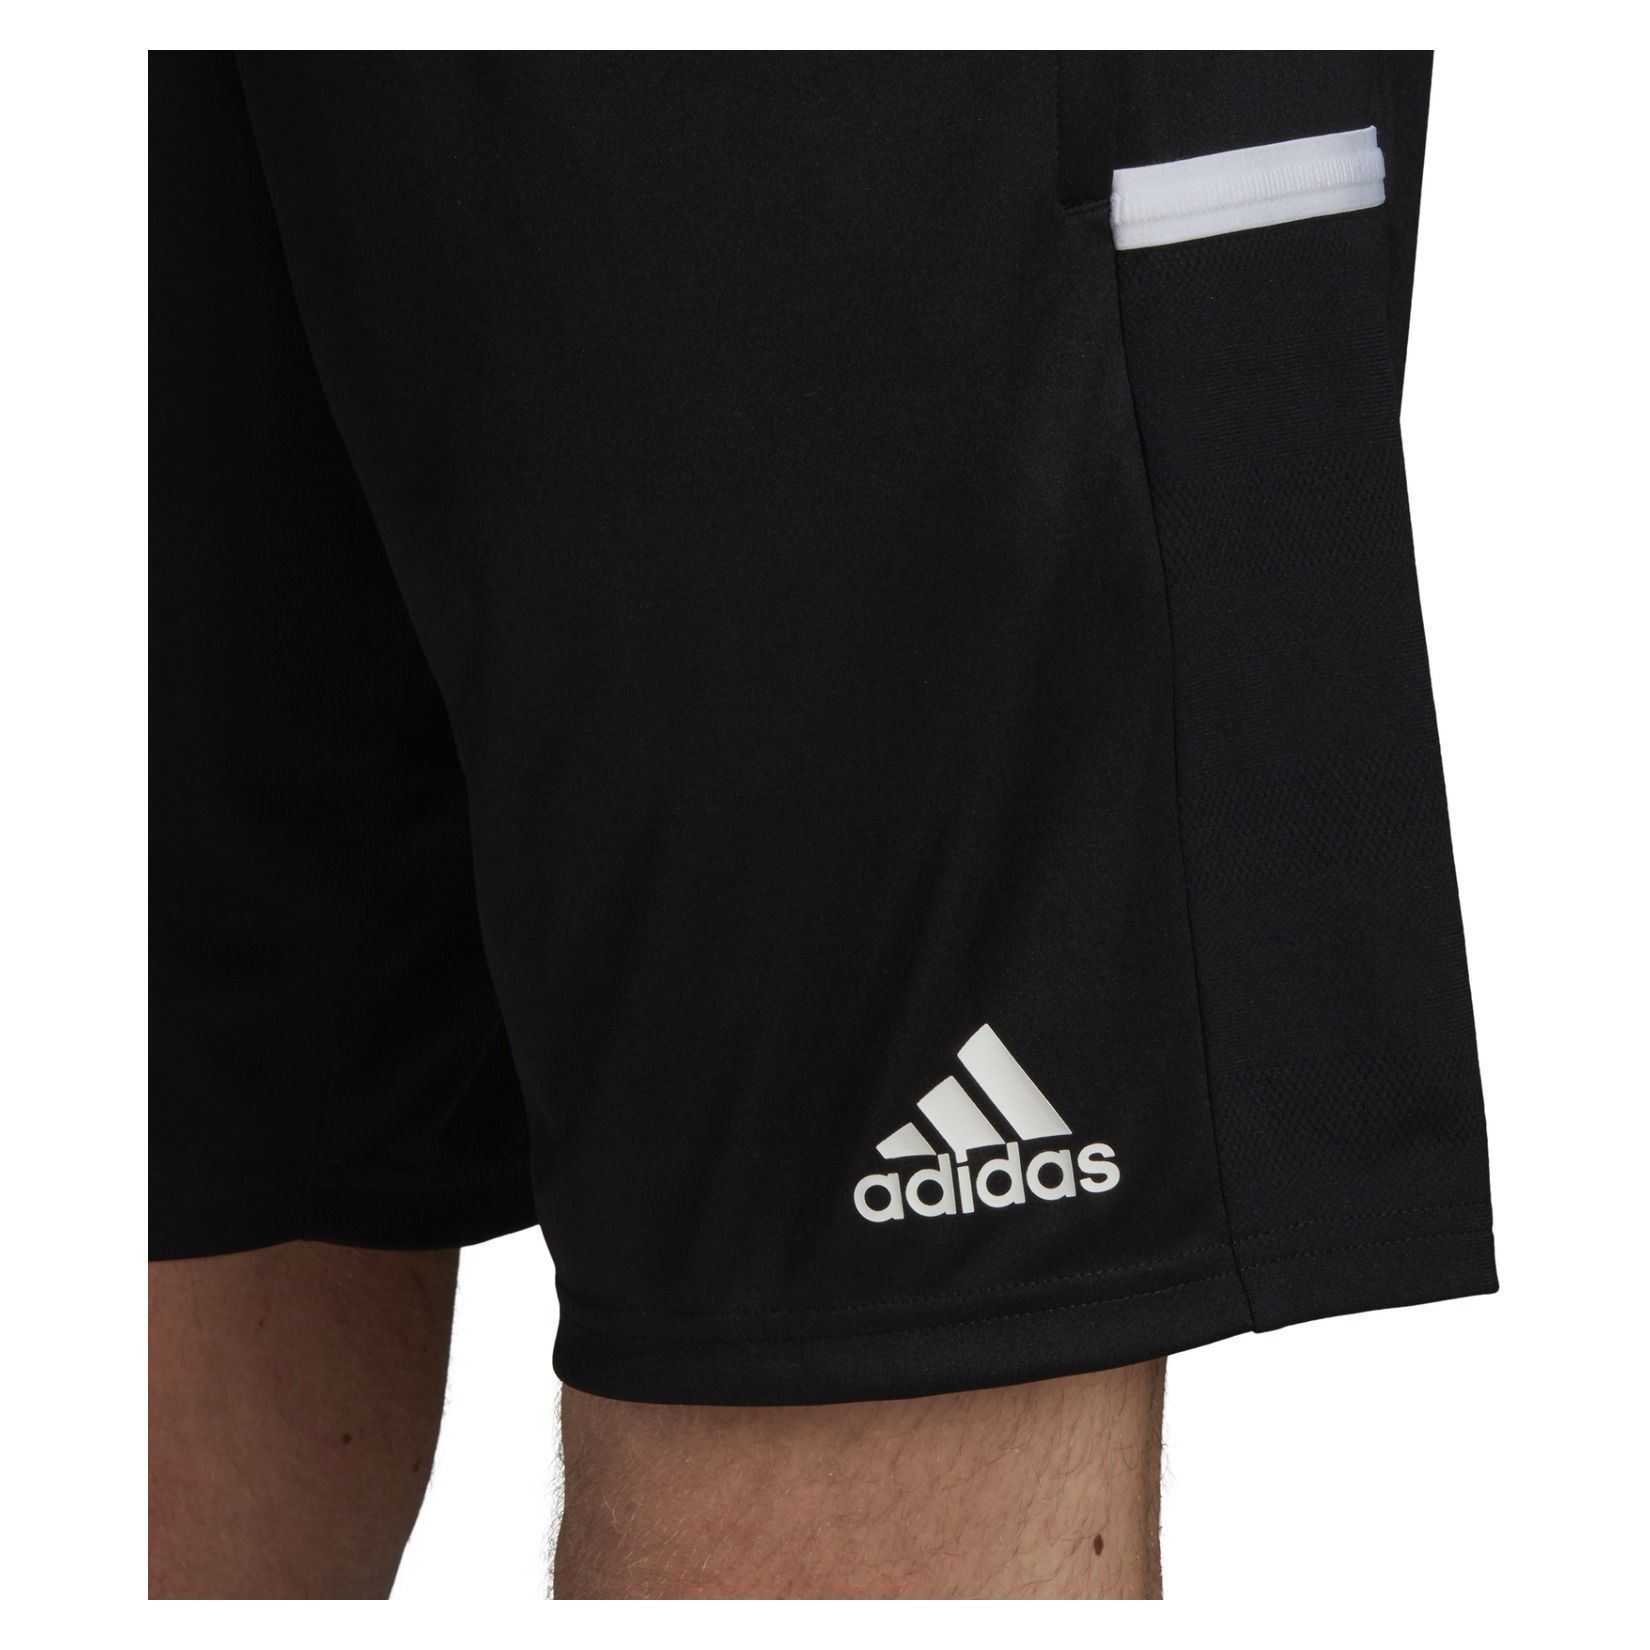 adidas team 19 3 pocket shorts